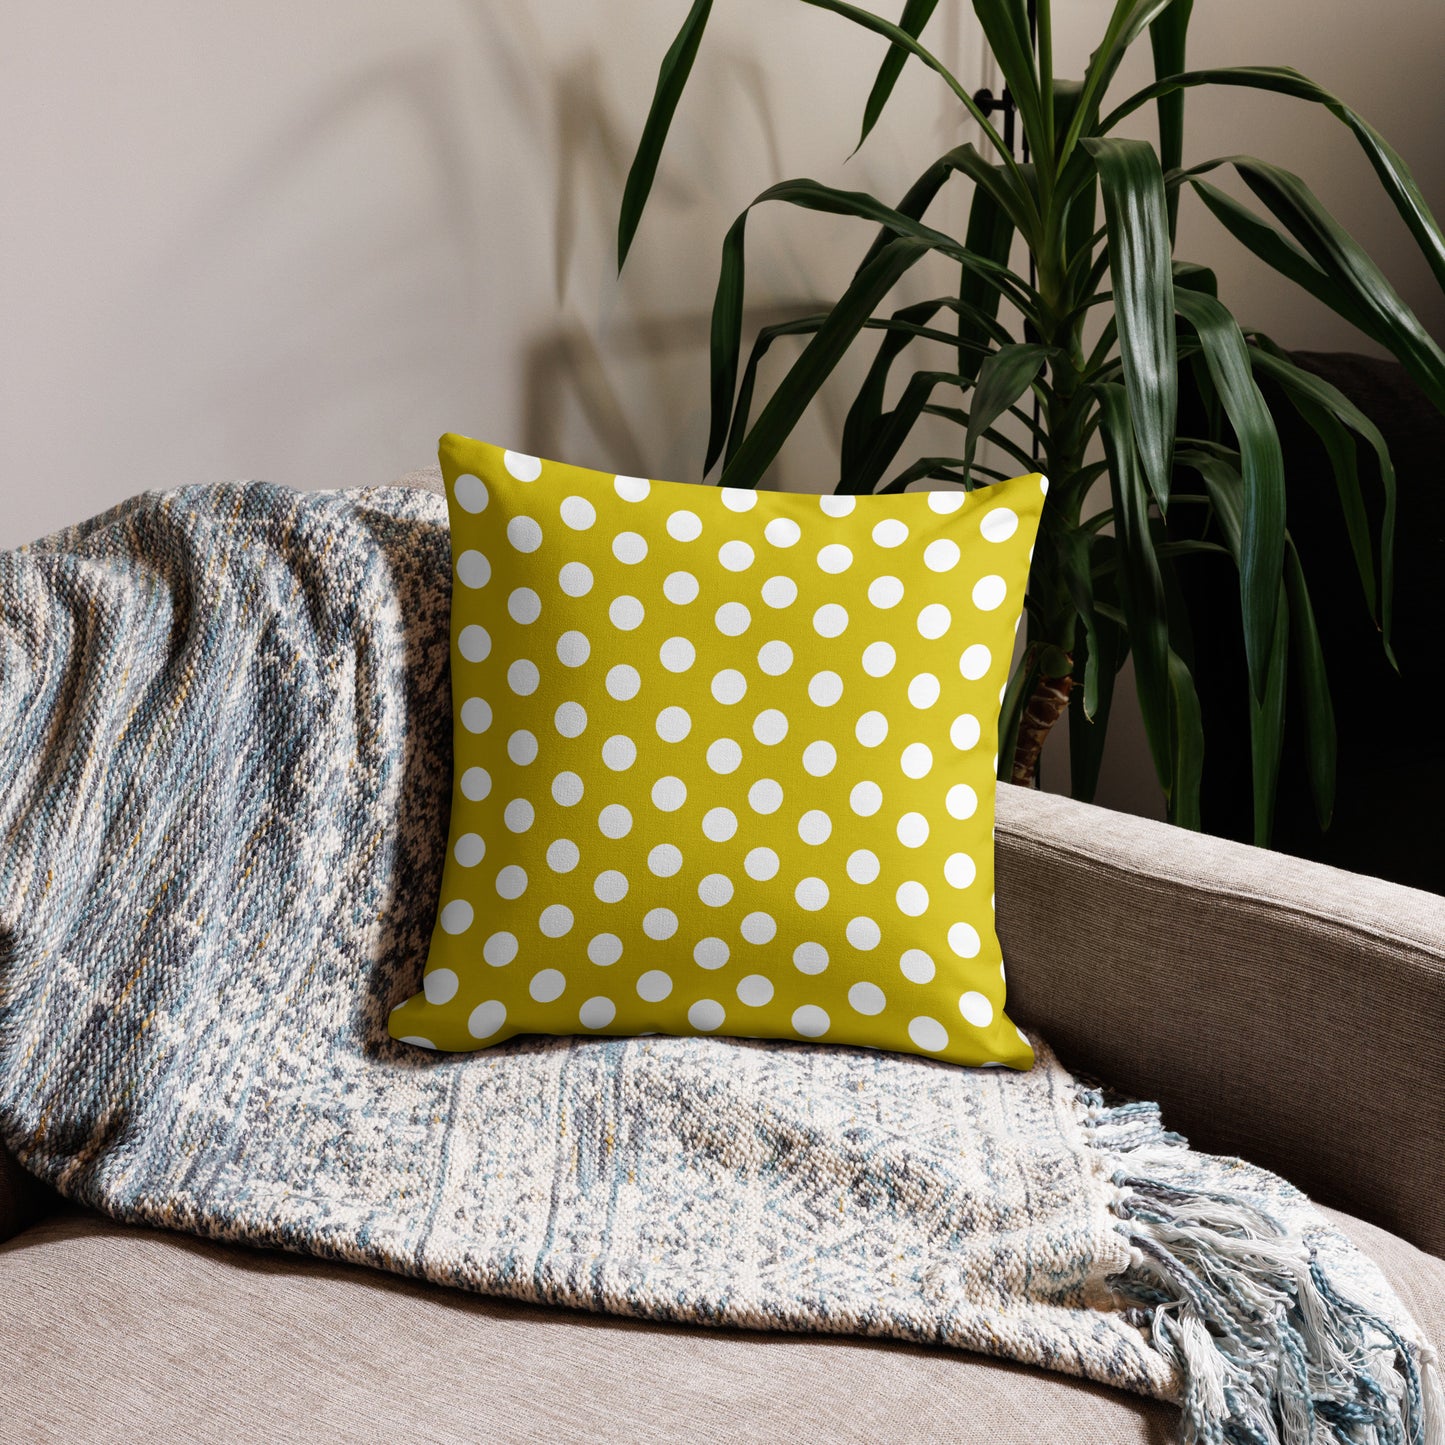 Snooty Fox Art Premium Pillow - White Polka Dots on Empire Yellow